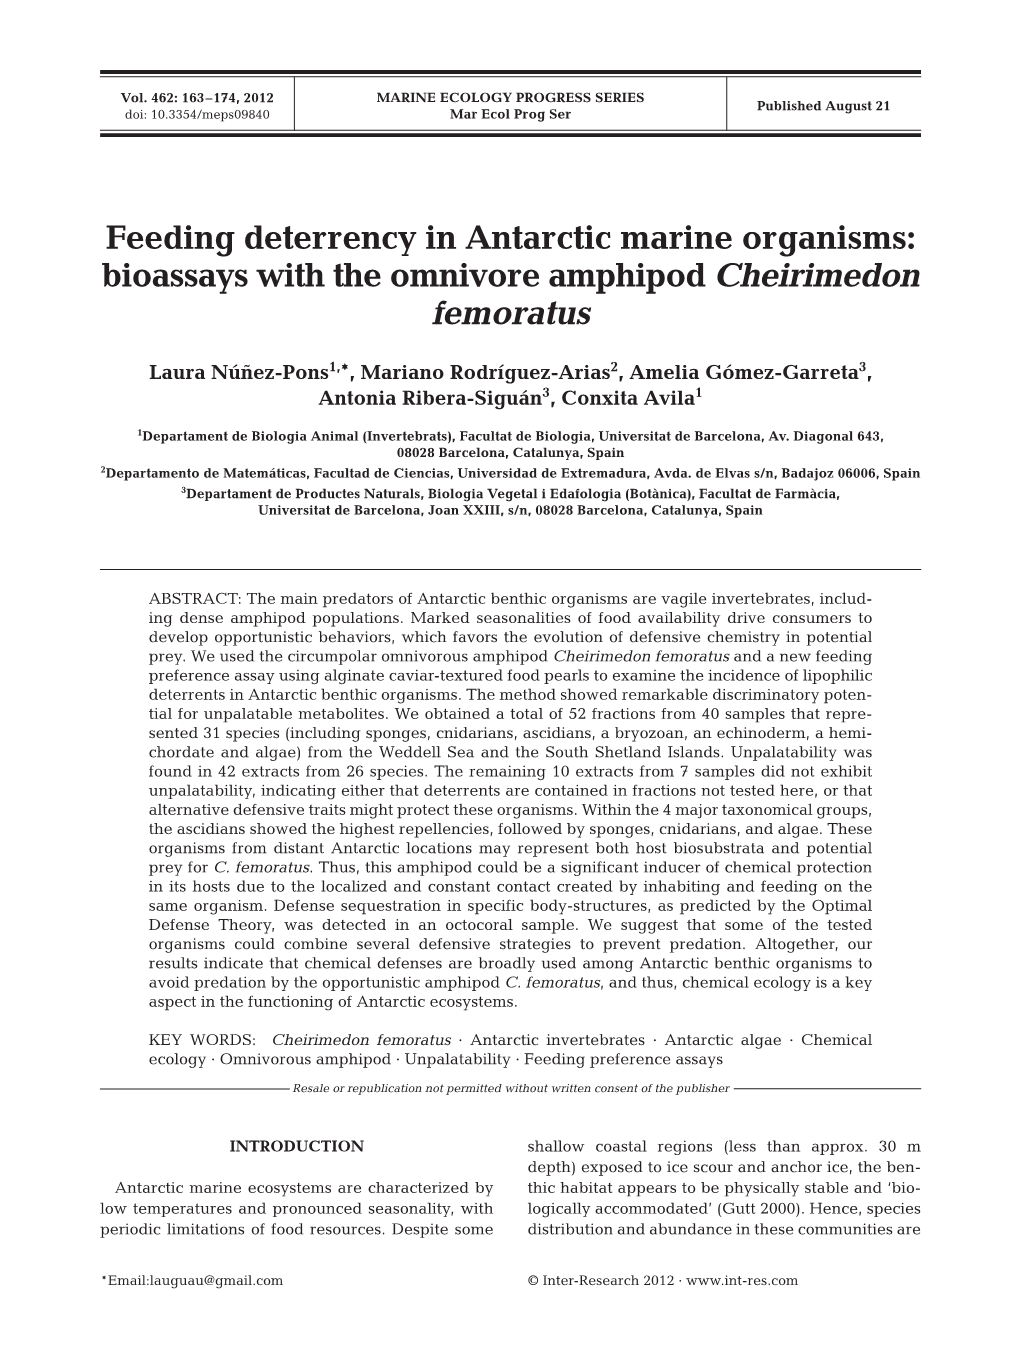 Feeding Deterrency in Antarctic Marine Organisms: Bioassays with the Omnivore Amphipod Cheirimedon Femoratus